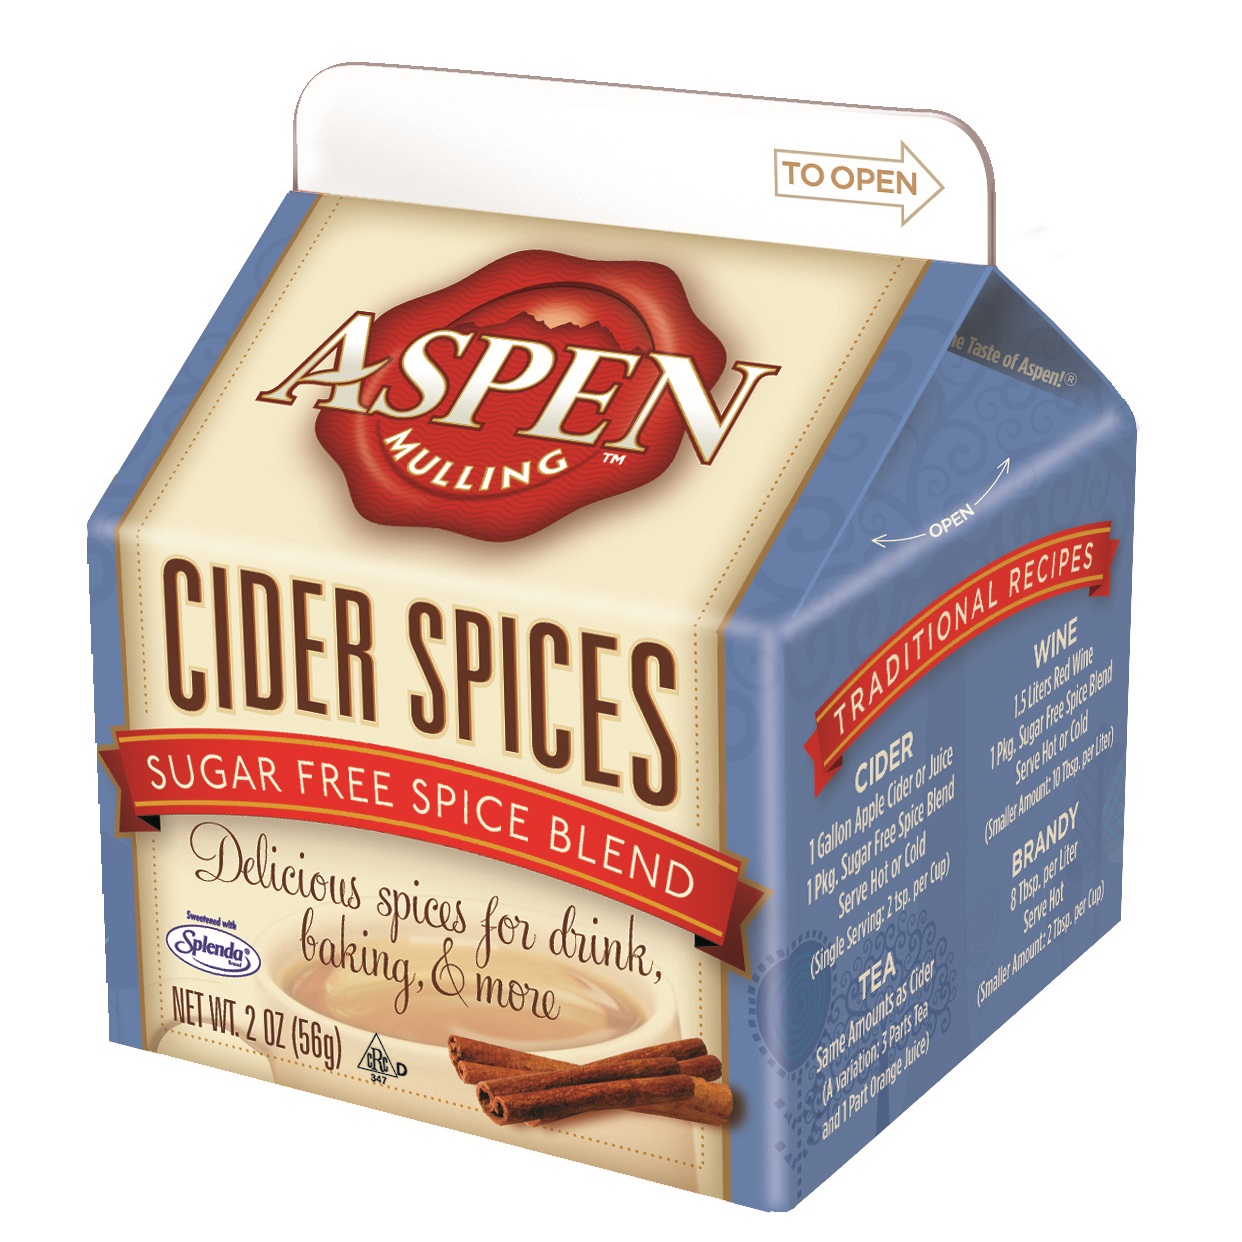 Aspen Mulling Spices Sugar Free Spice Blend